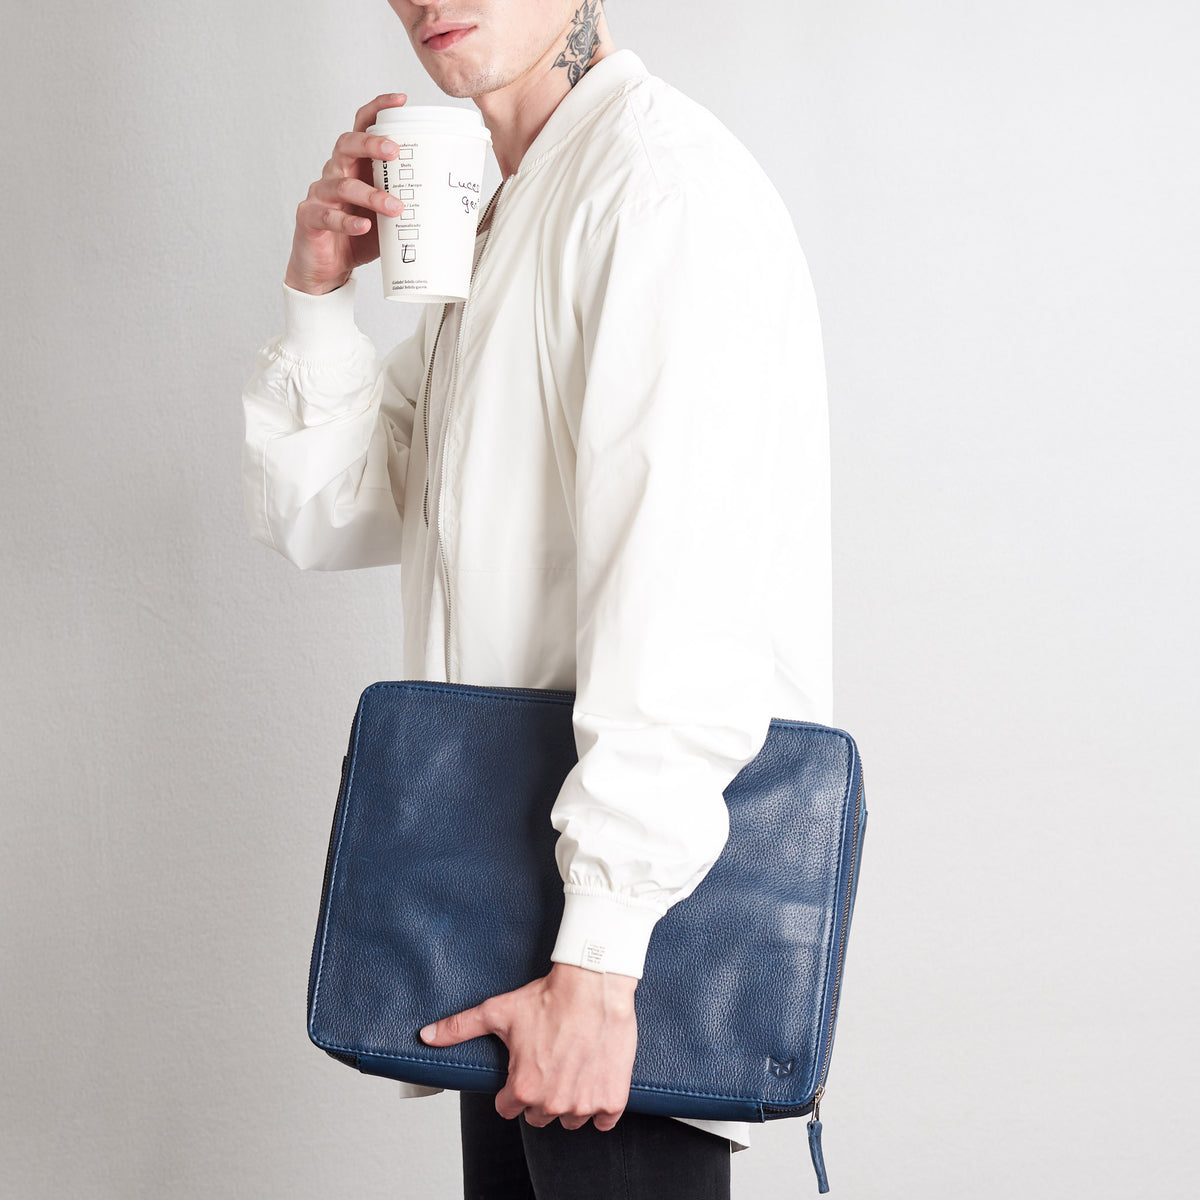 Style tech bag. Navy blue gadget bag by Capra Leather